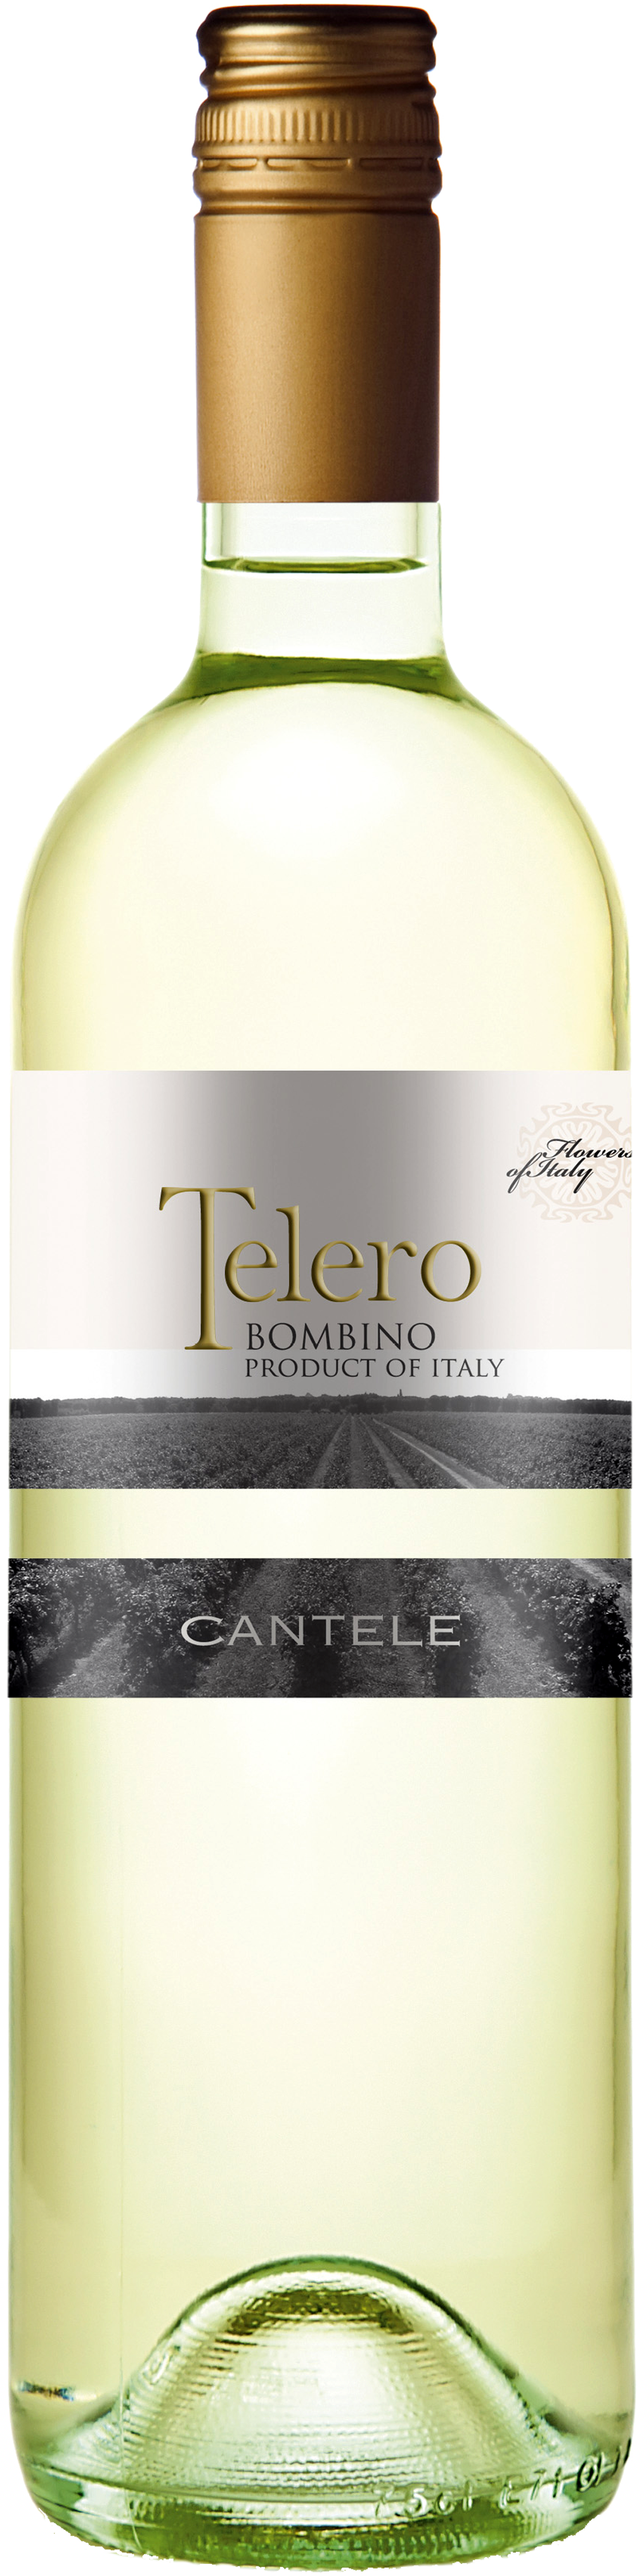 Bottle shot of 2010 Telero Bianco (Bombino)